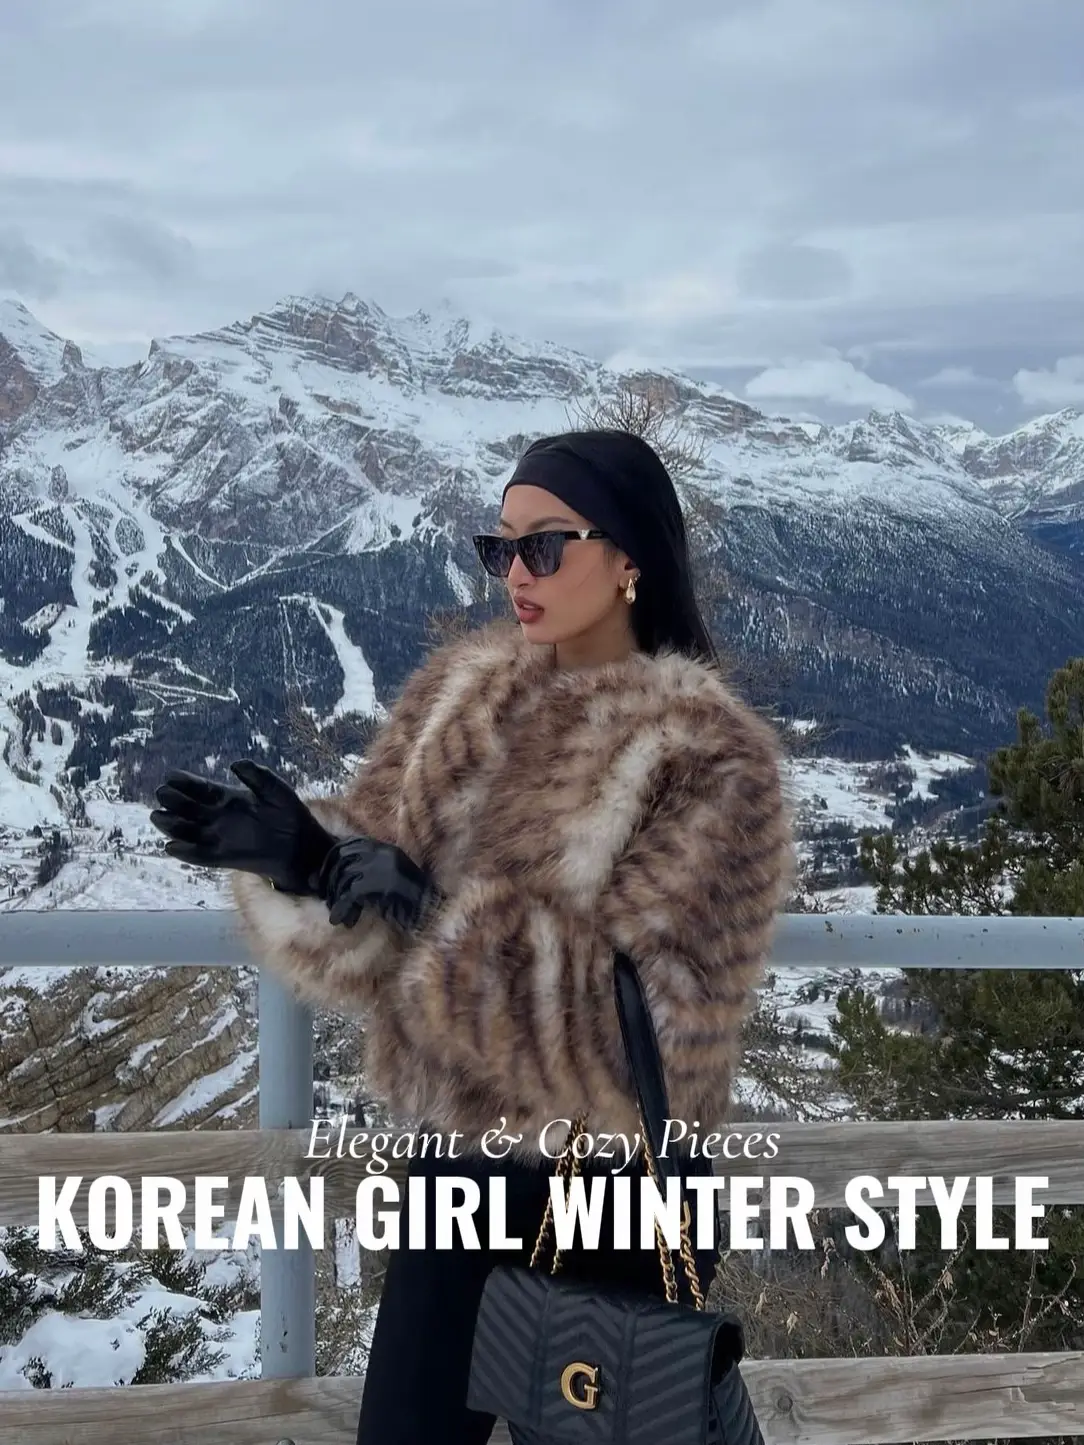 Korean Girl Winter Fashion Looks 's images